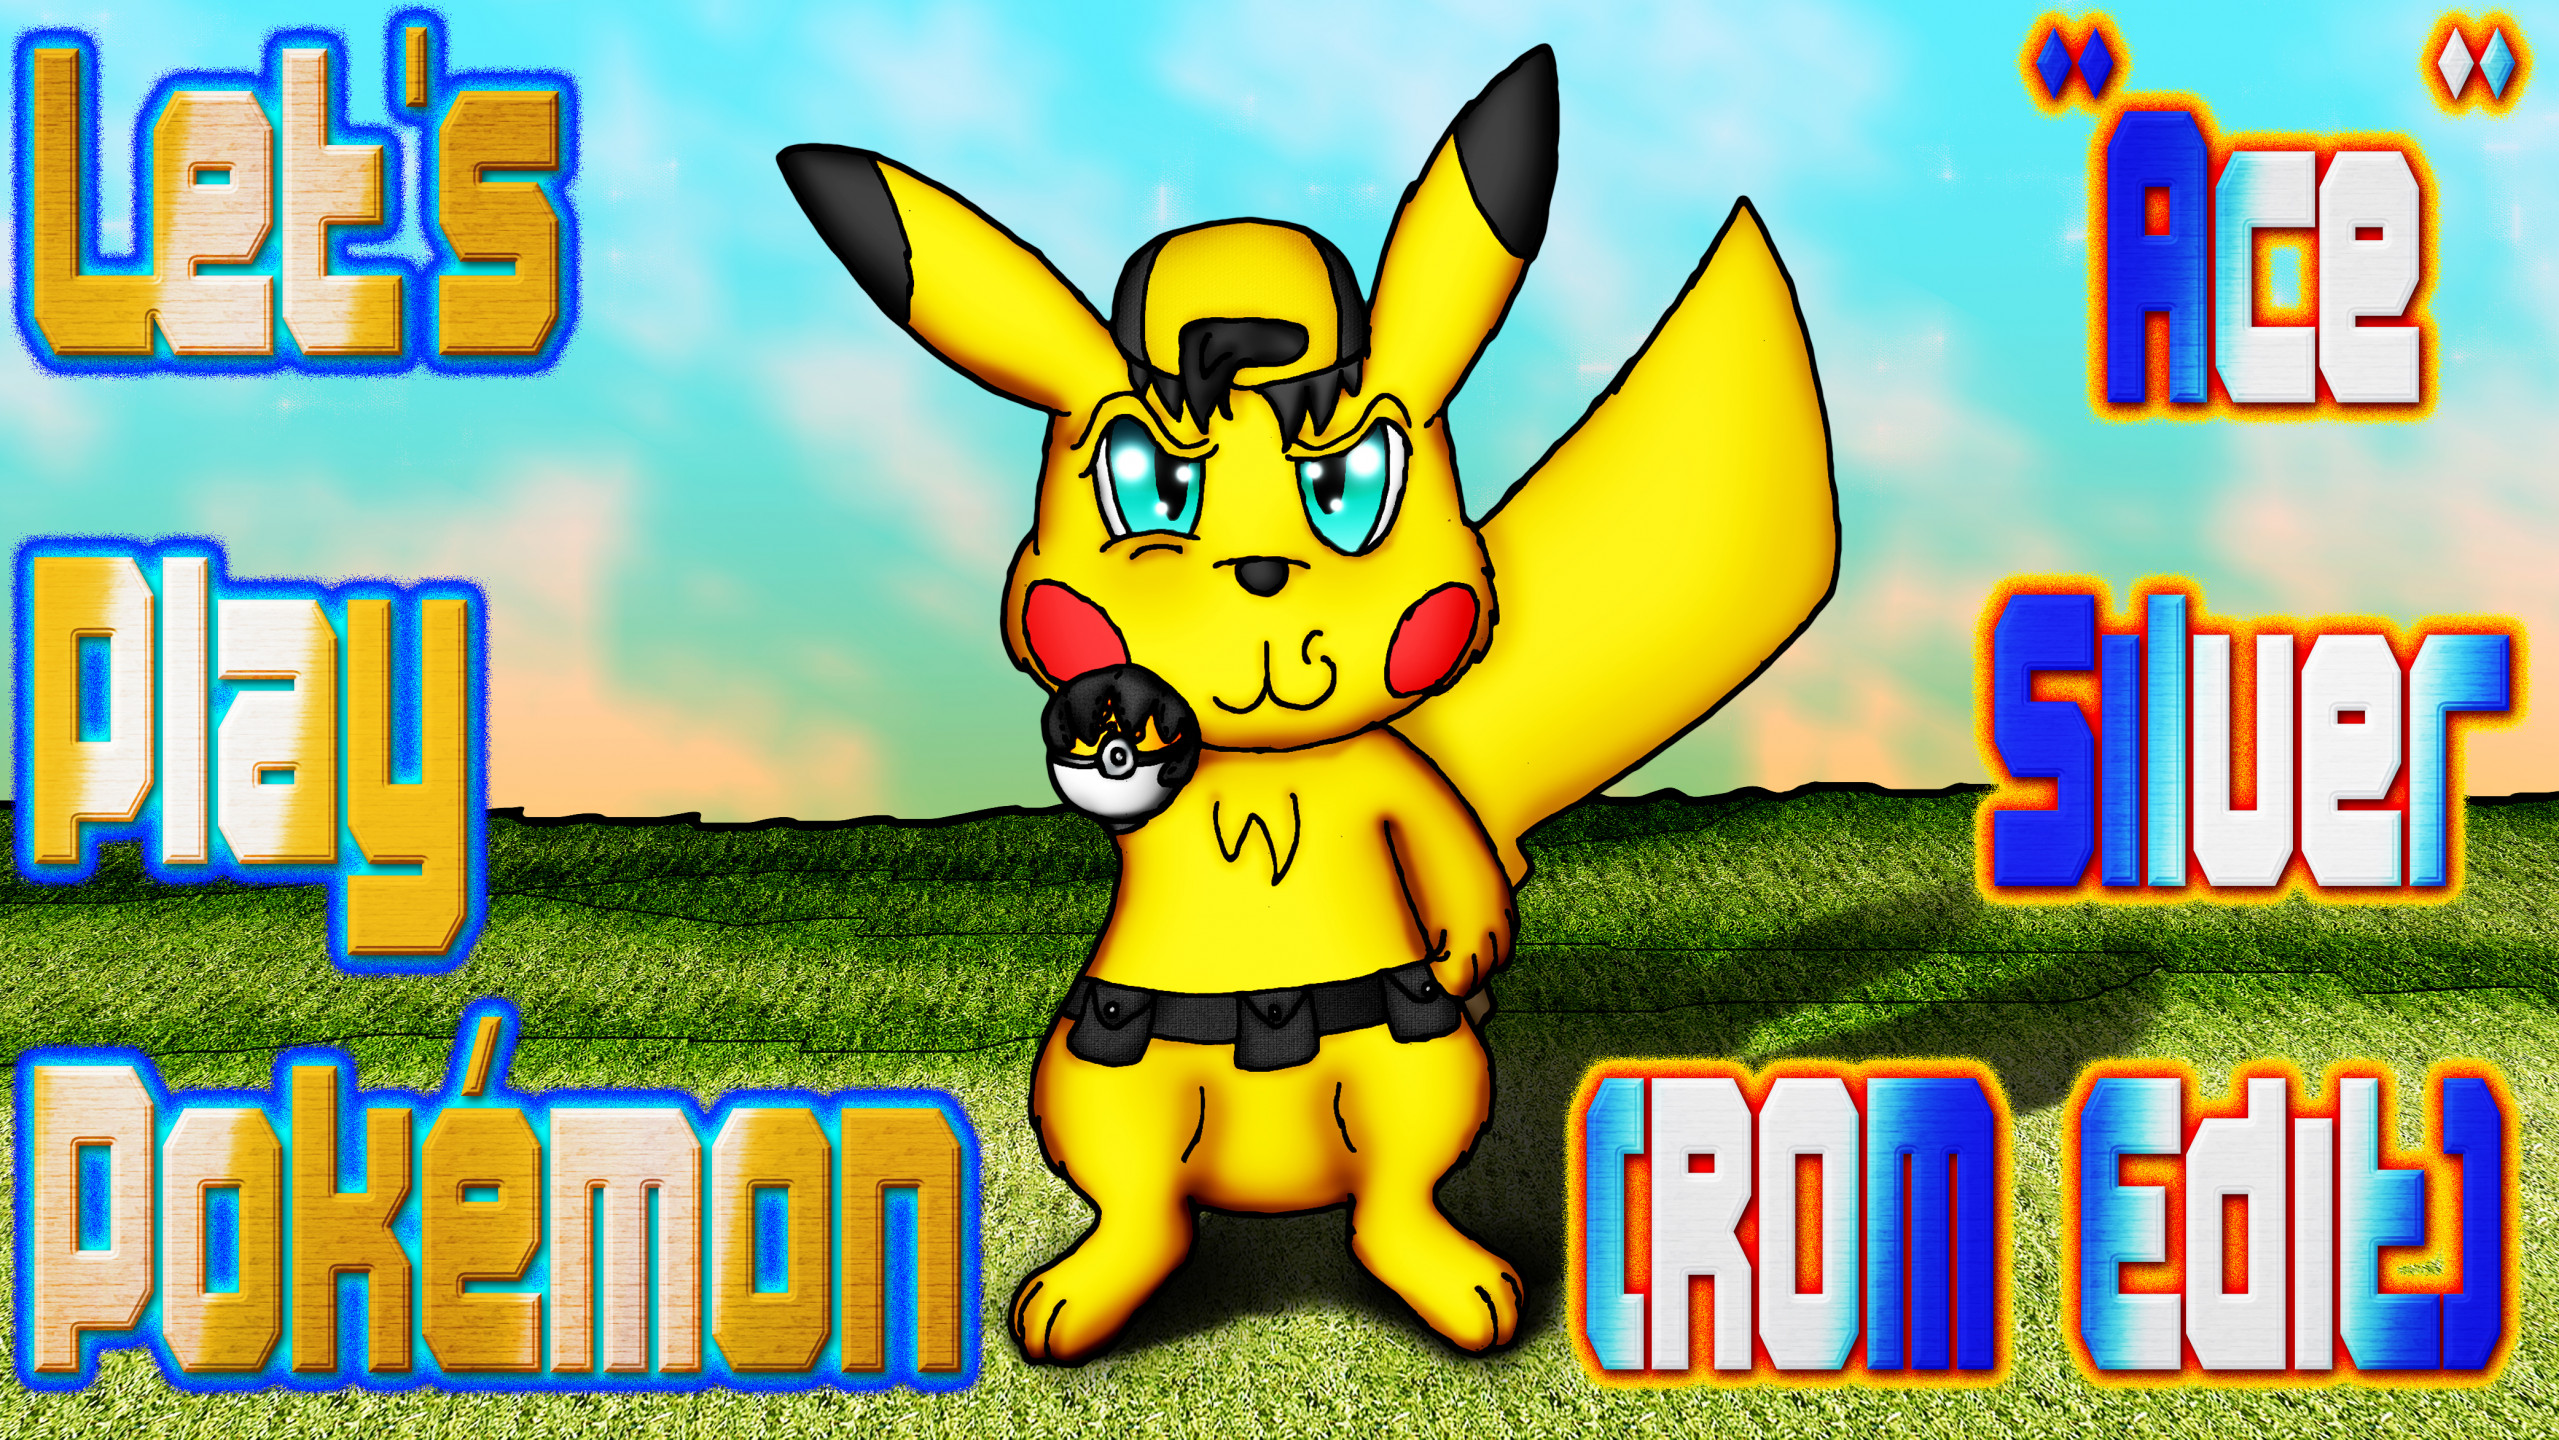 Pokemon - SoulSilver Randomizer ROM - Nintendo DS Download